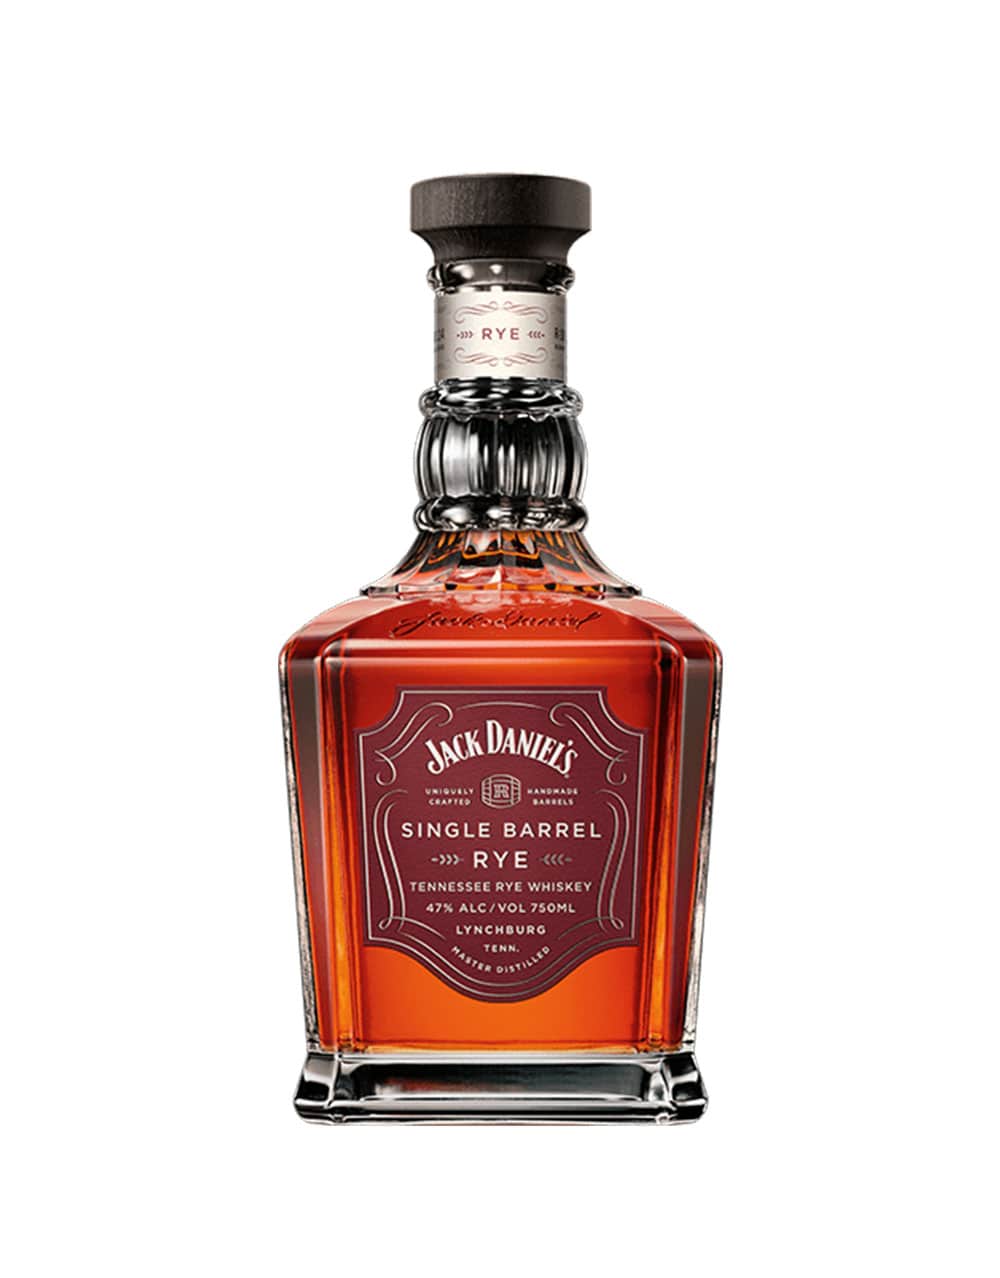 Jack Daniels Single Barrel Tennessee Rye whiskey 375ml